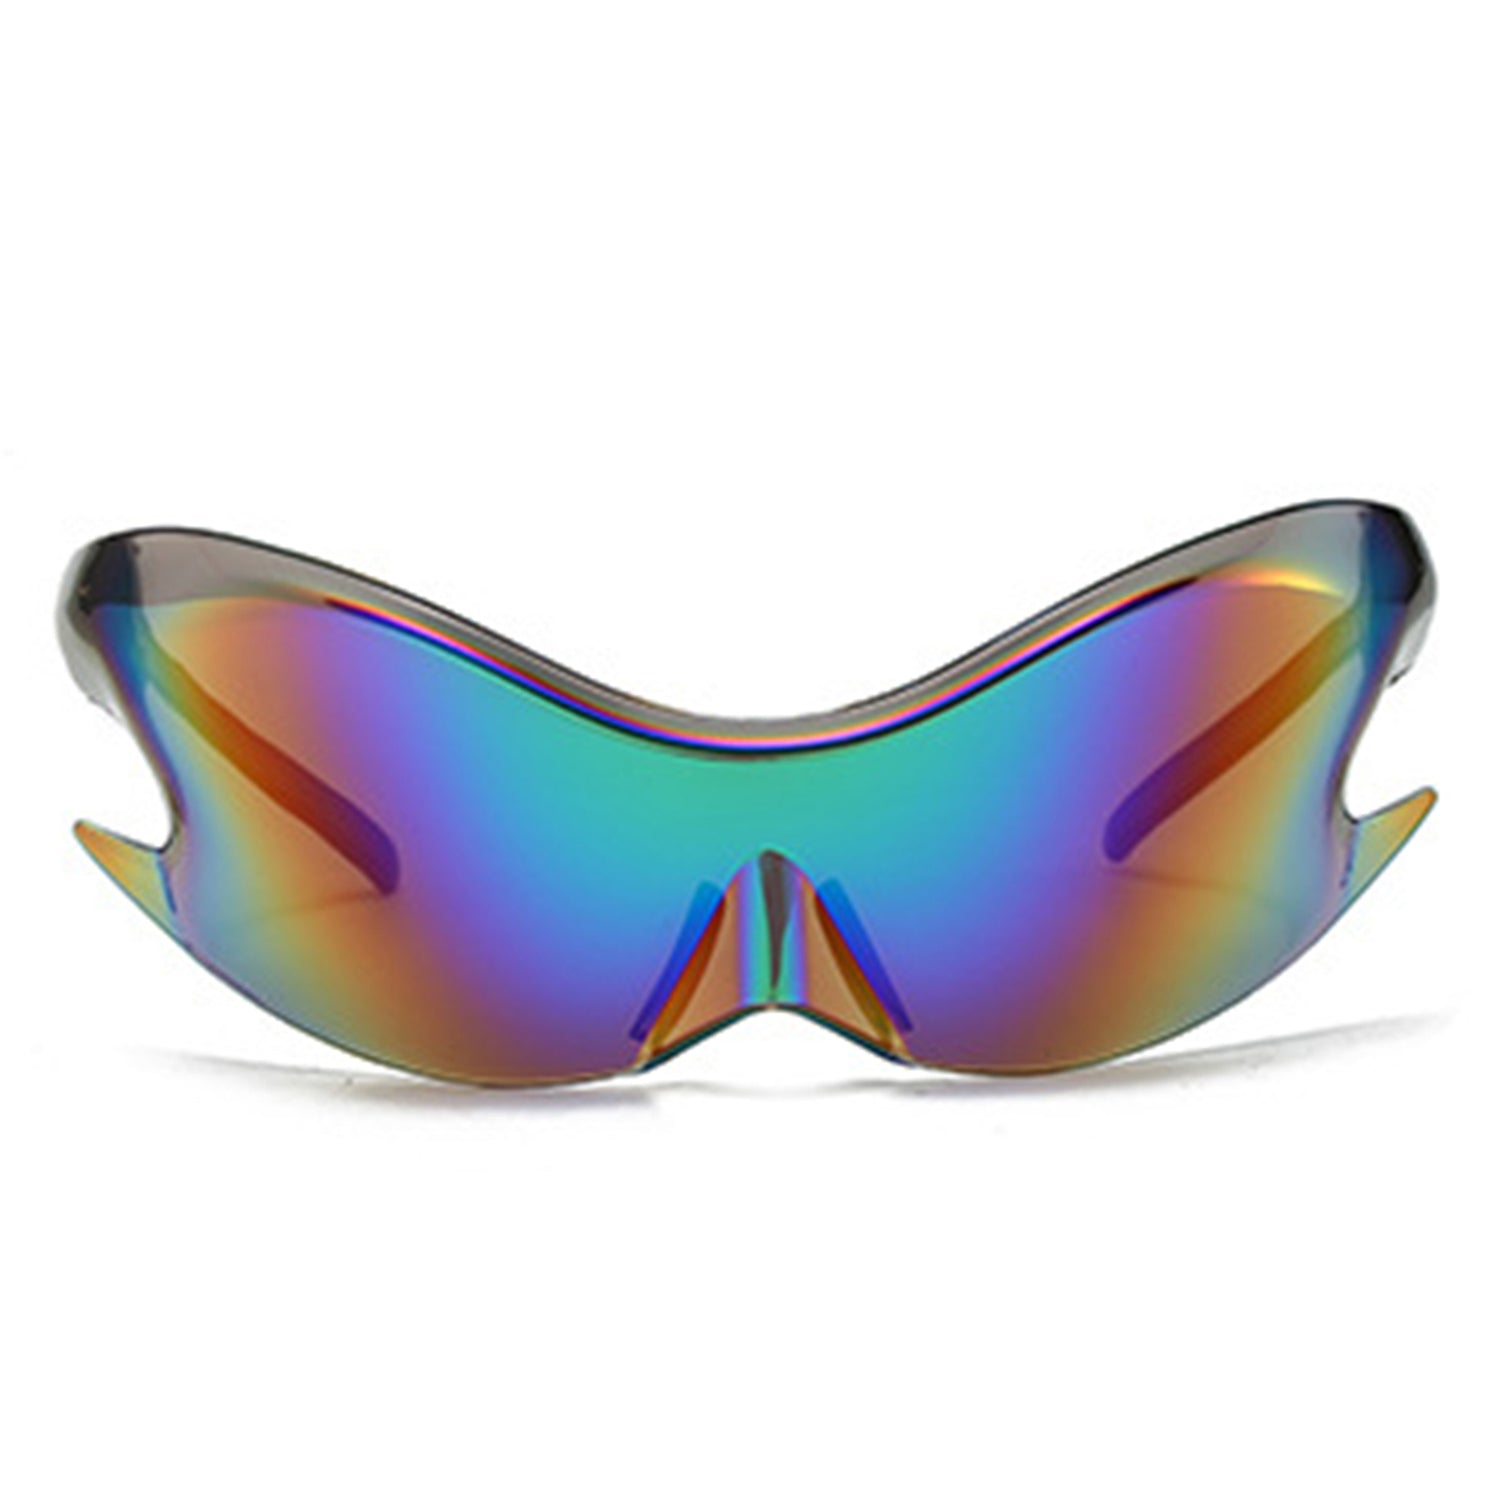 Whiestan - Futuristic Mirrored Sleek Wrap Around Sports Sunglasses Pink